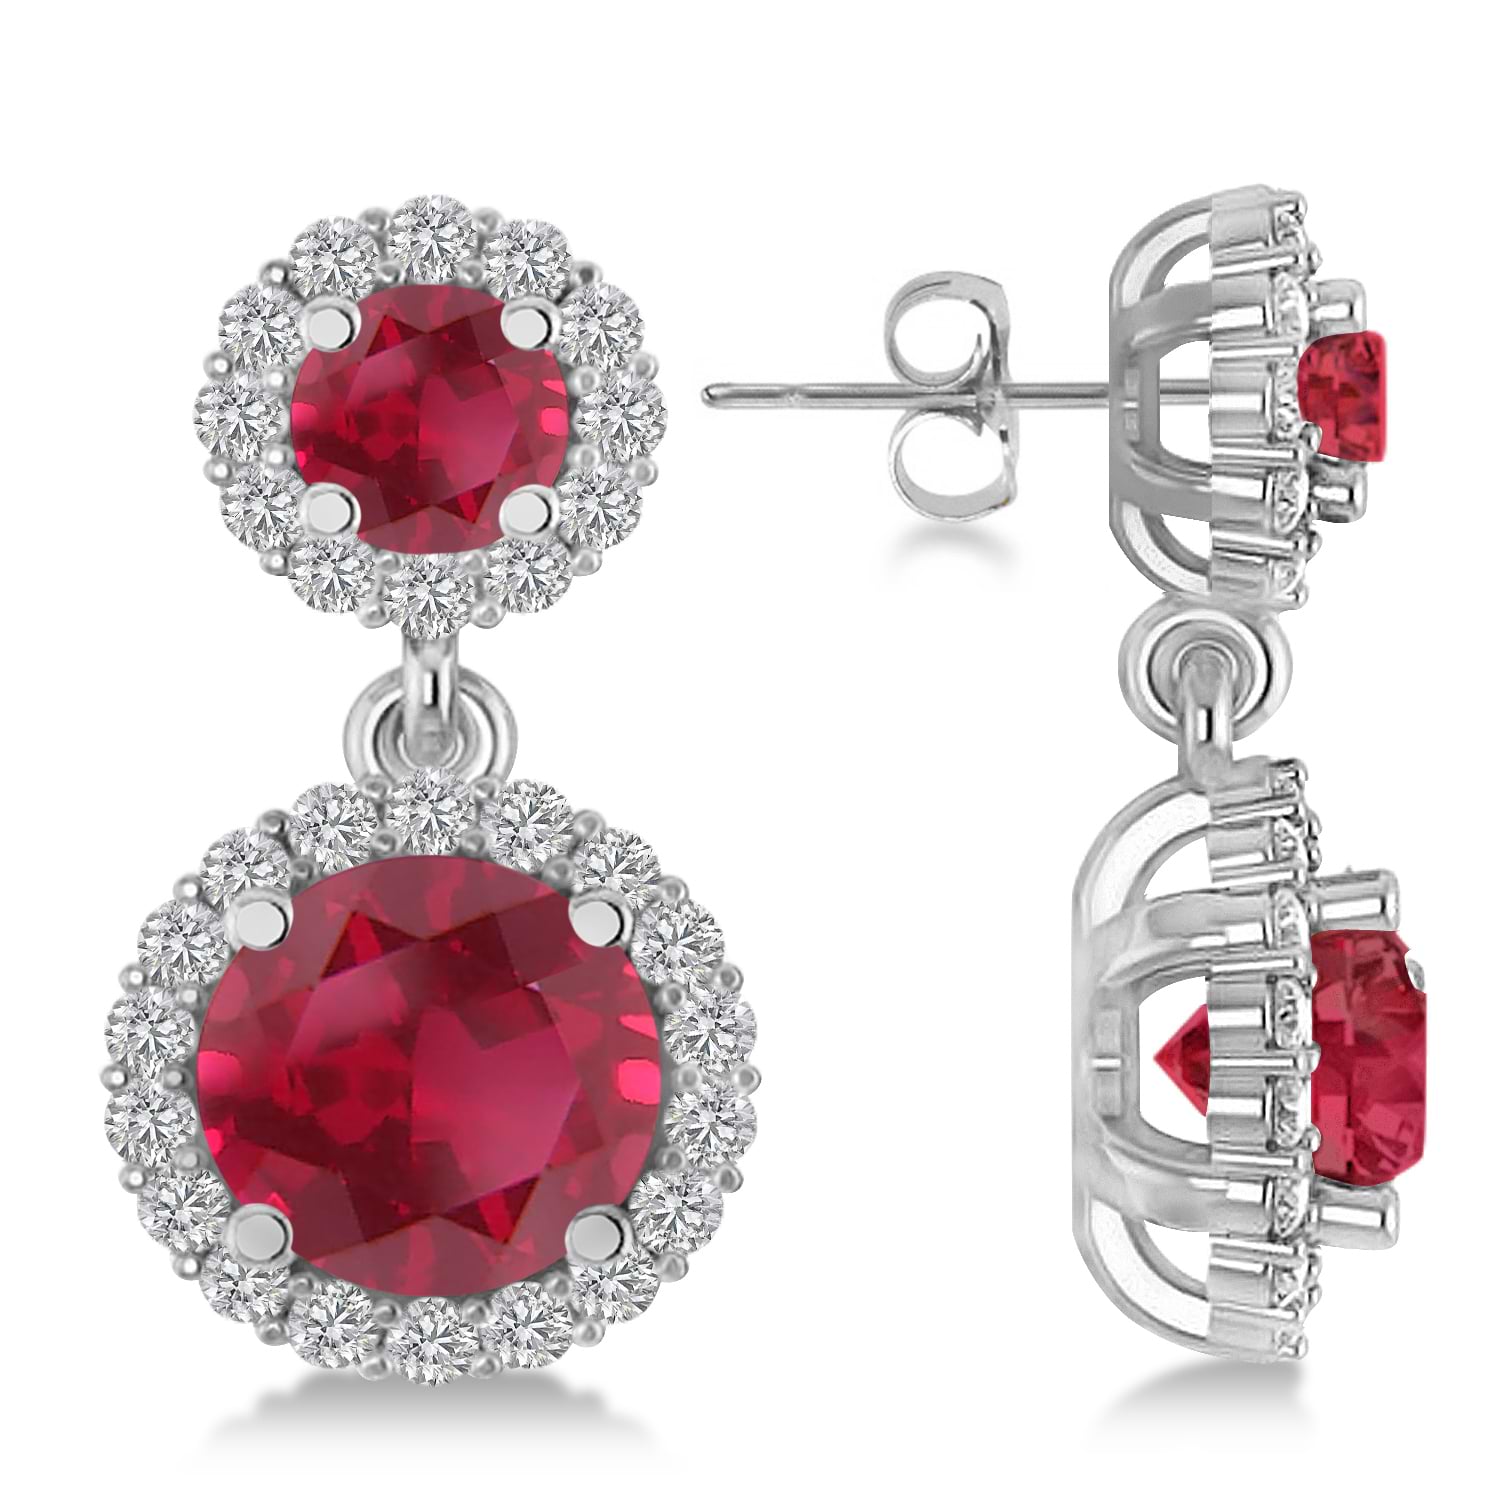 Two Stone Dangling Ruby & Diamond Earrings 14k White Gold (3.00ct)